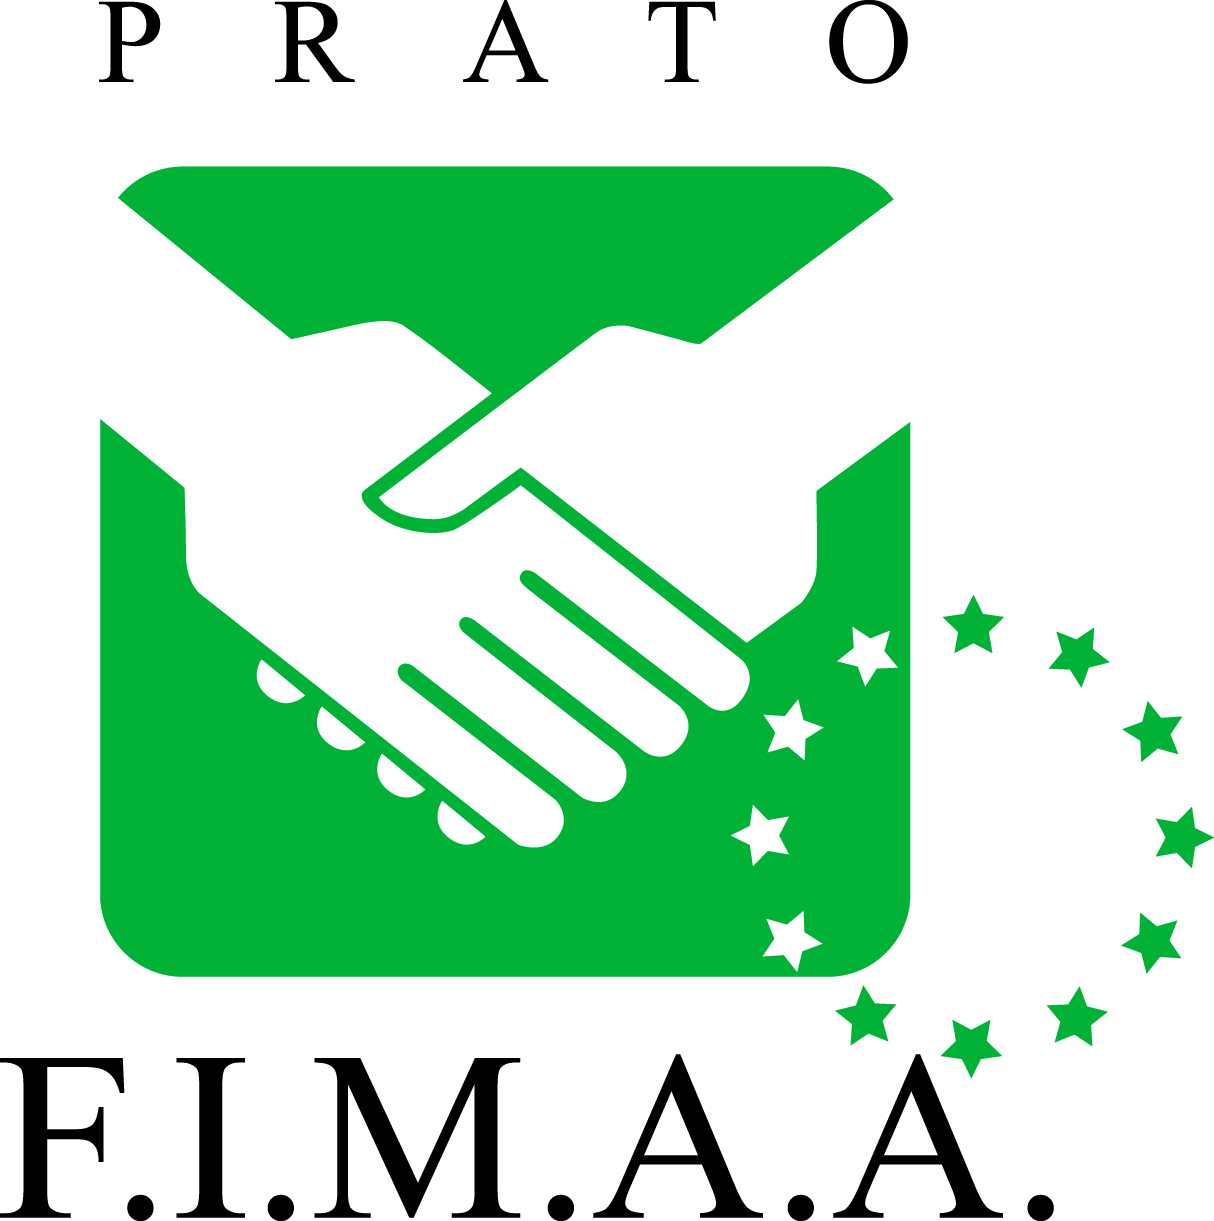 FIMAA Prato